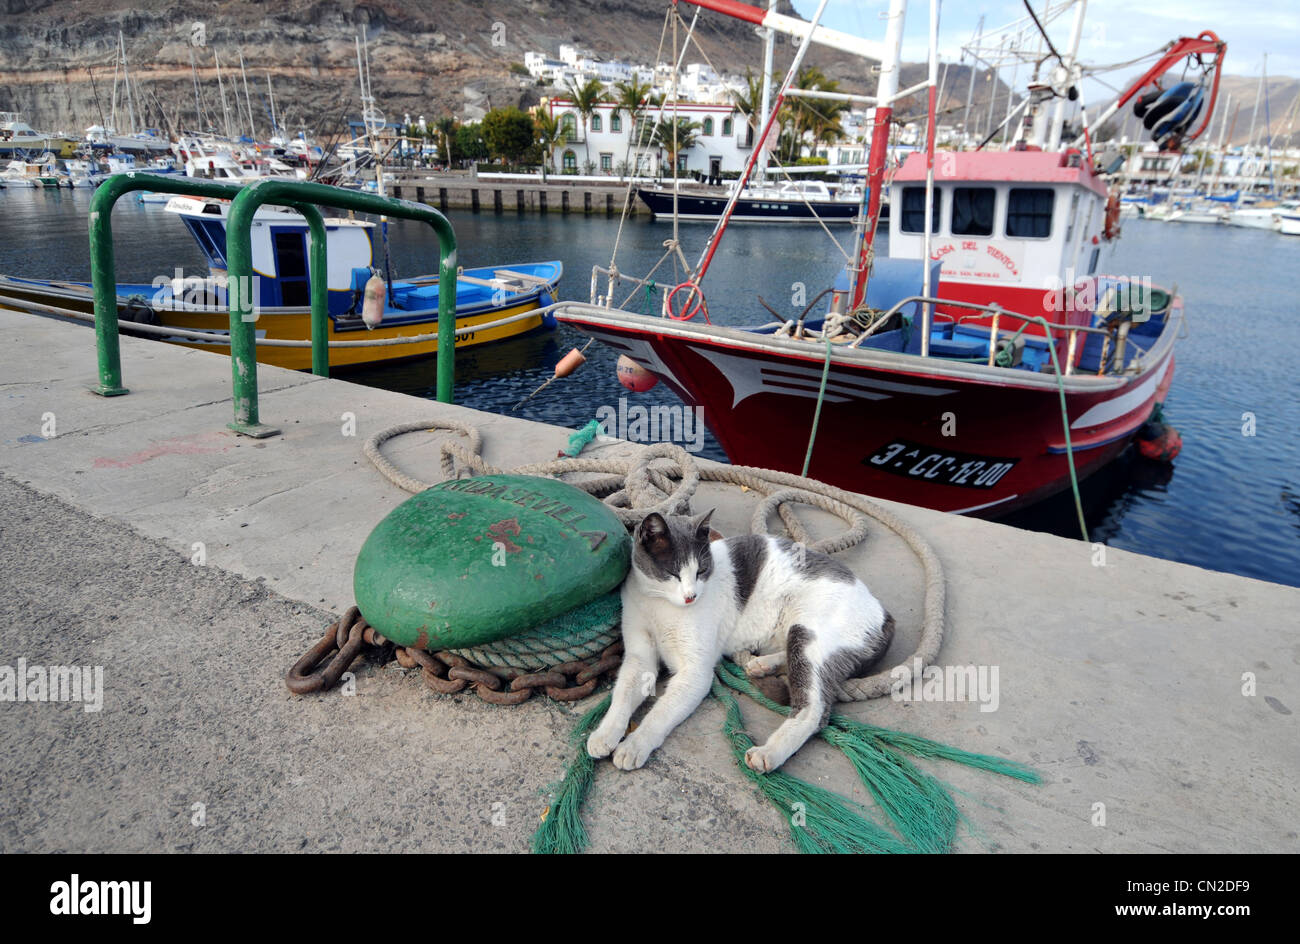 Puerto de Mogán, cat sleeping on the harbourside, Puerto de Mogan, Gran Canaria, Canary Islands Stock Photo